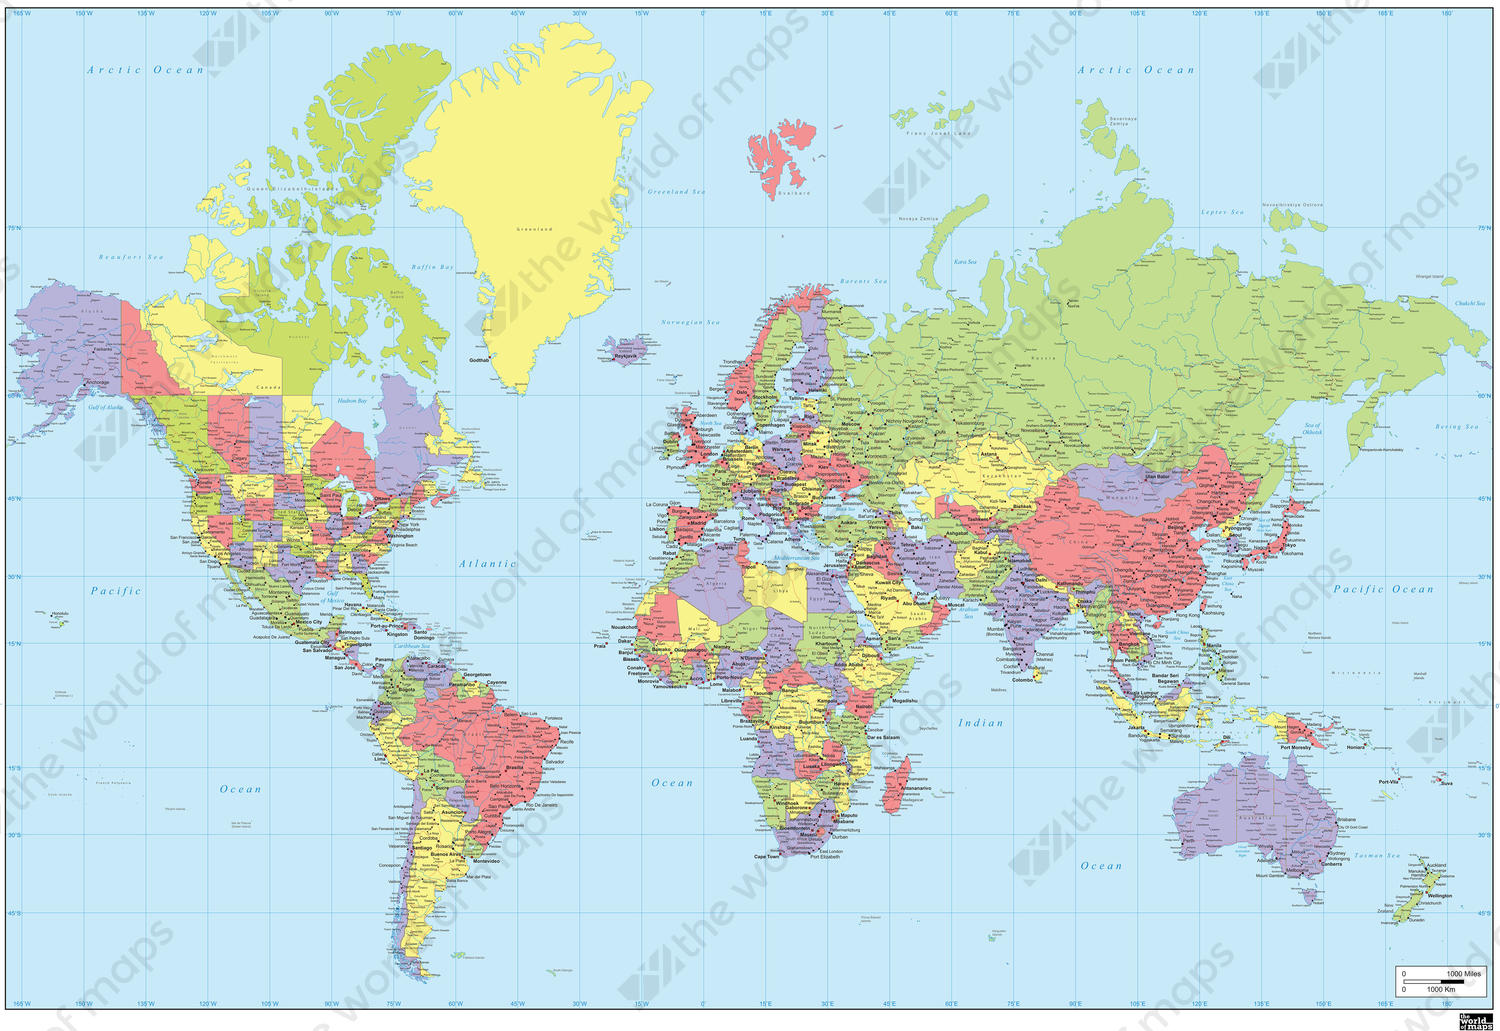 Digital World Map Political 93 | The World of Maps.com